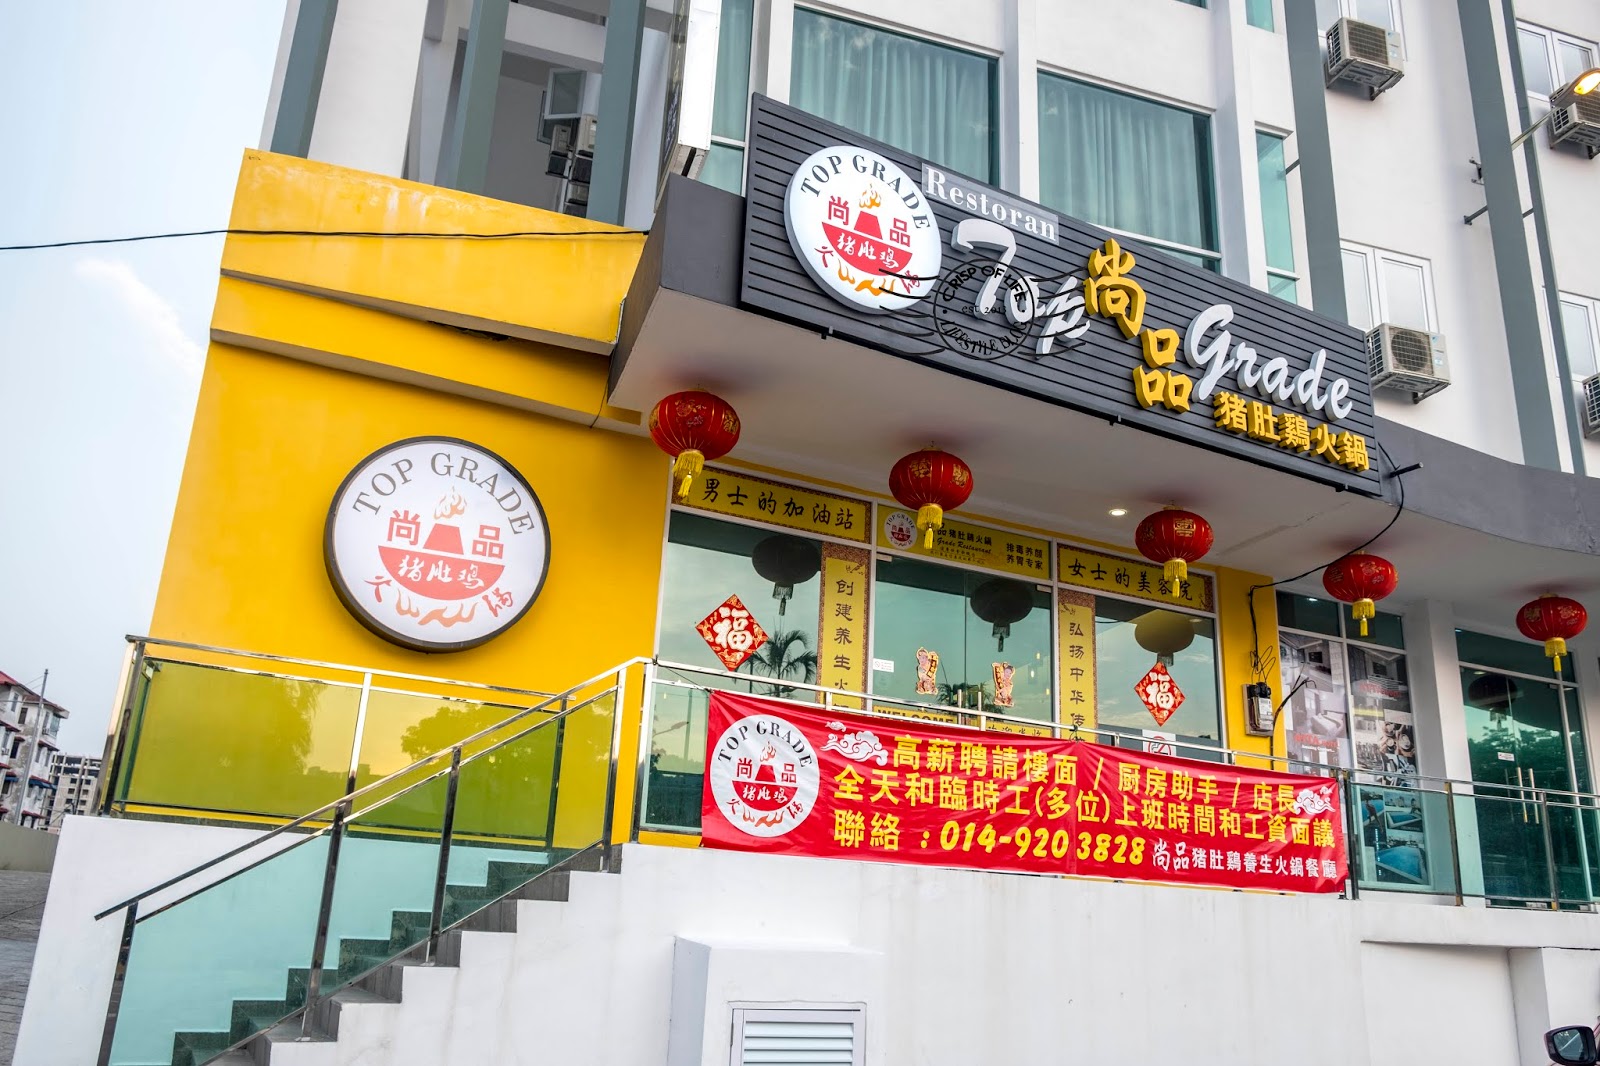 Top Grade Steamboat Restaurant 尚品猪肚鸡火锅 @ Jelutong, Penang